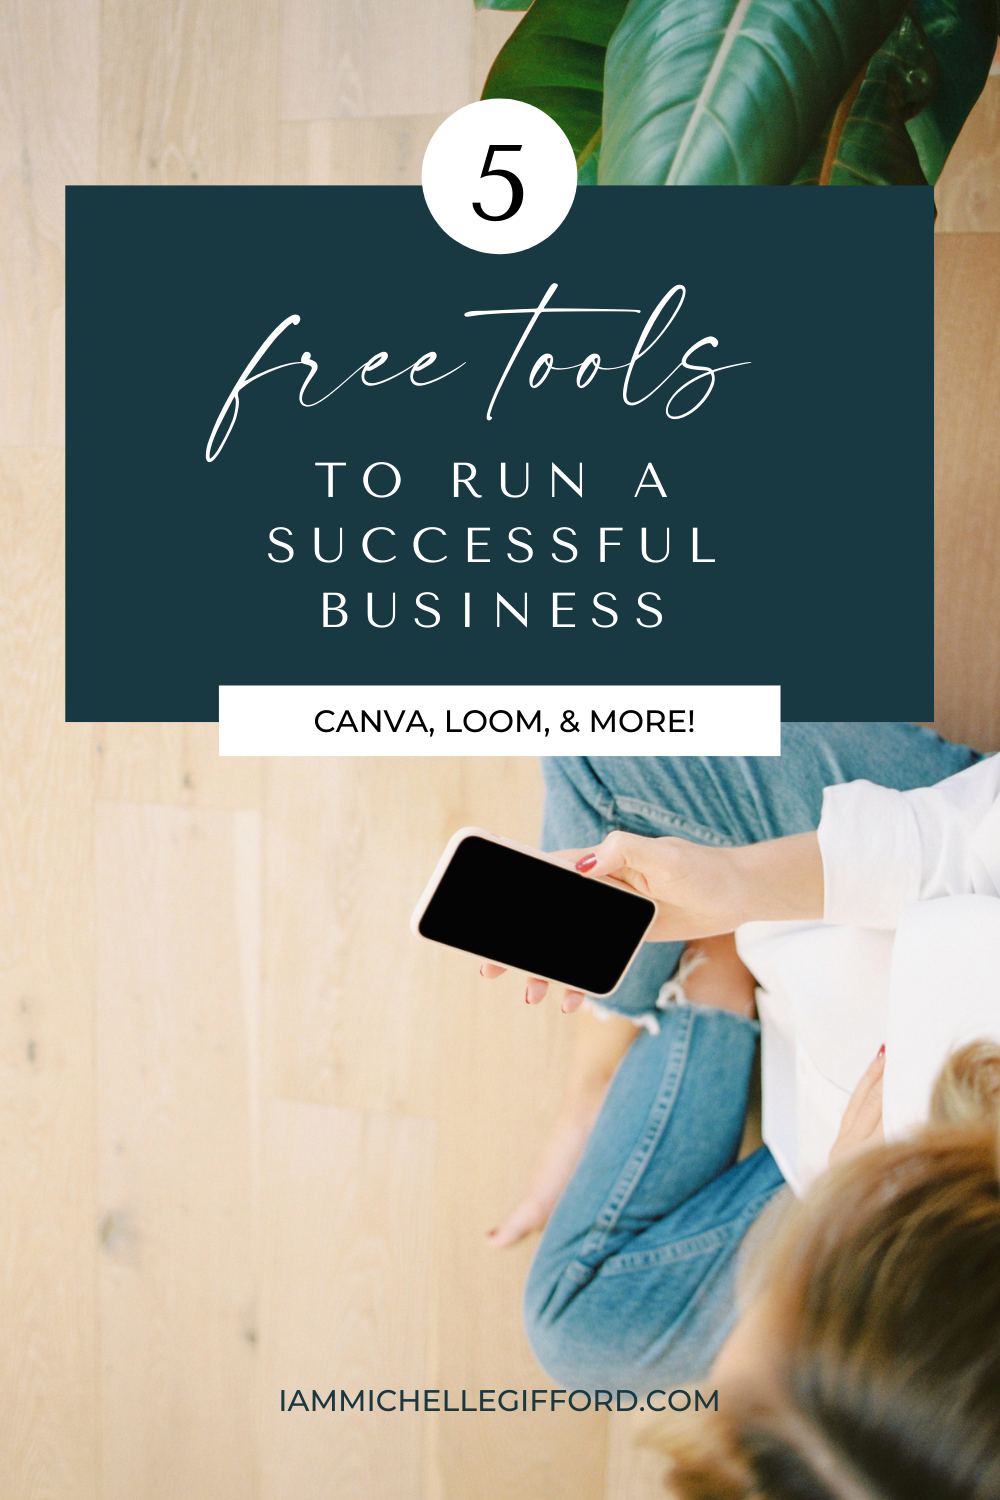 5 free tools to run a successful business iammichellegifford.com.